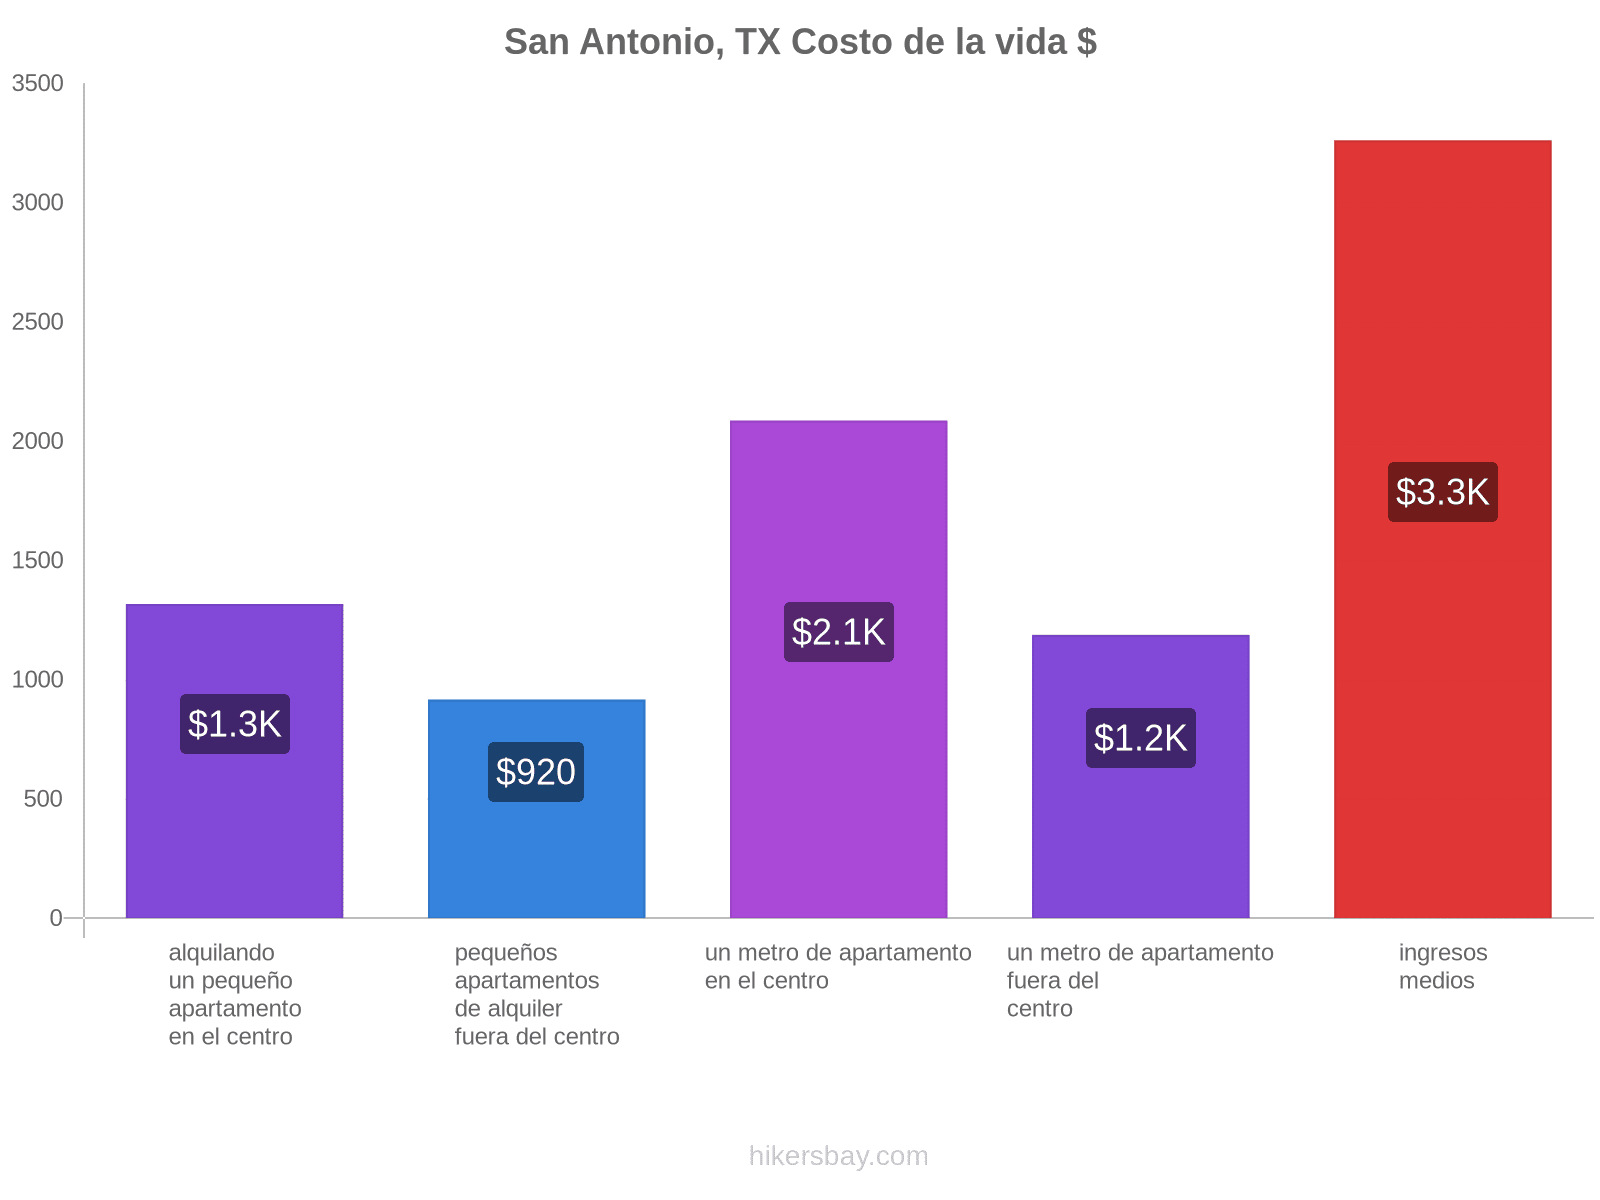 San Antonio, TX costo de la vida hikersbay.com